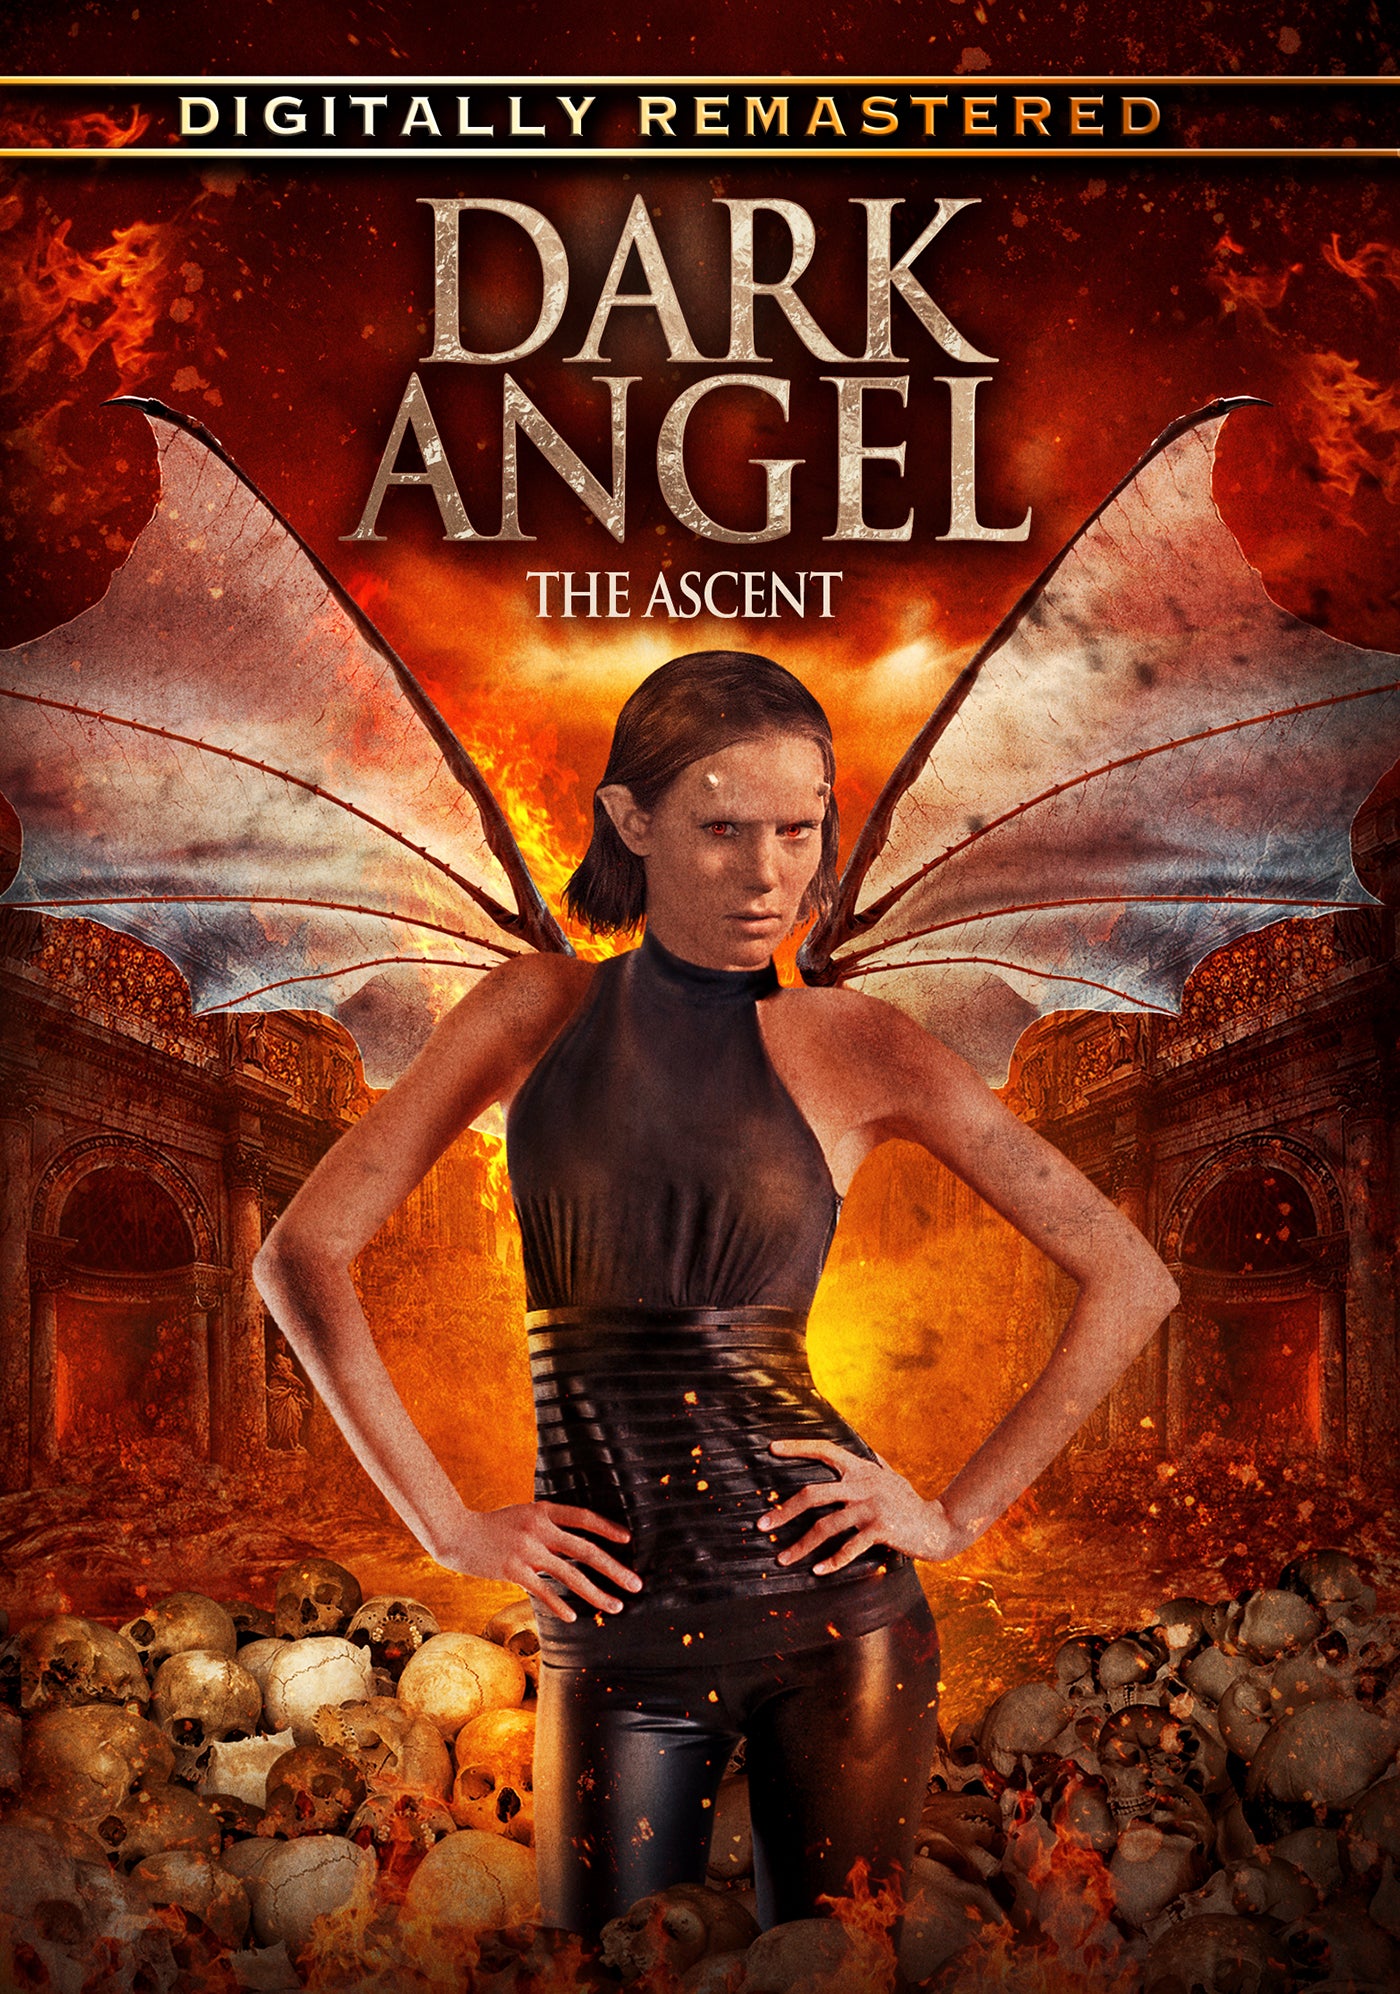 DARK ANGEL: THE ASCENT DVD